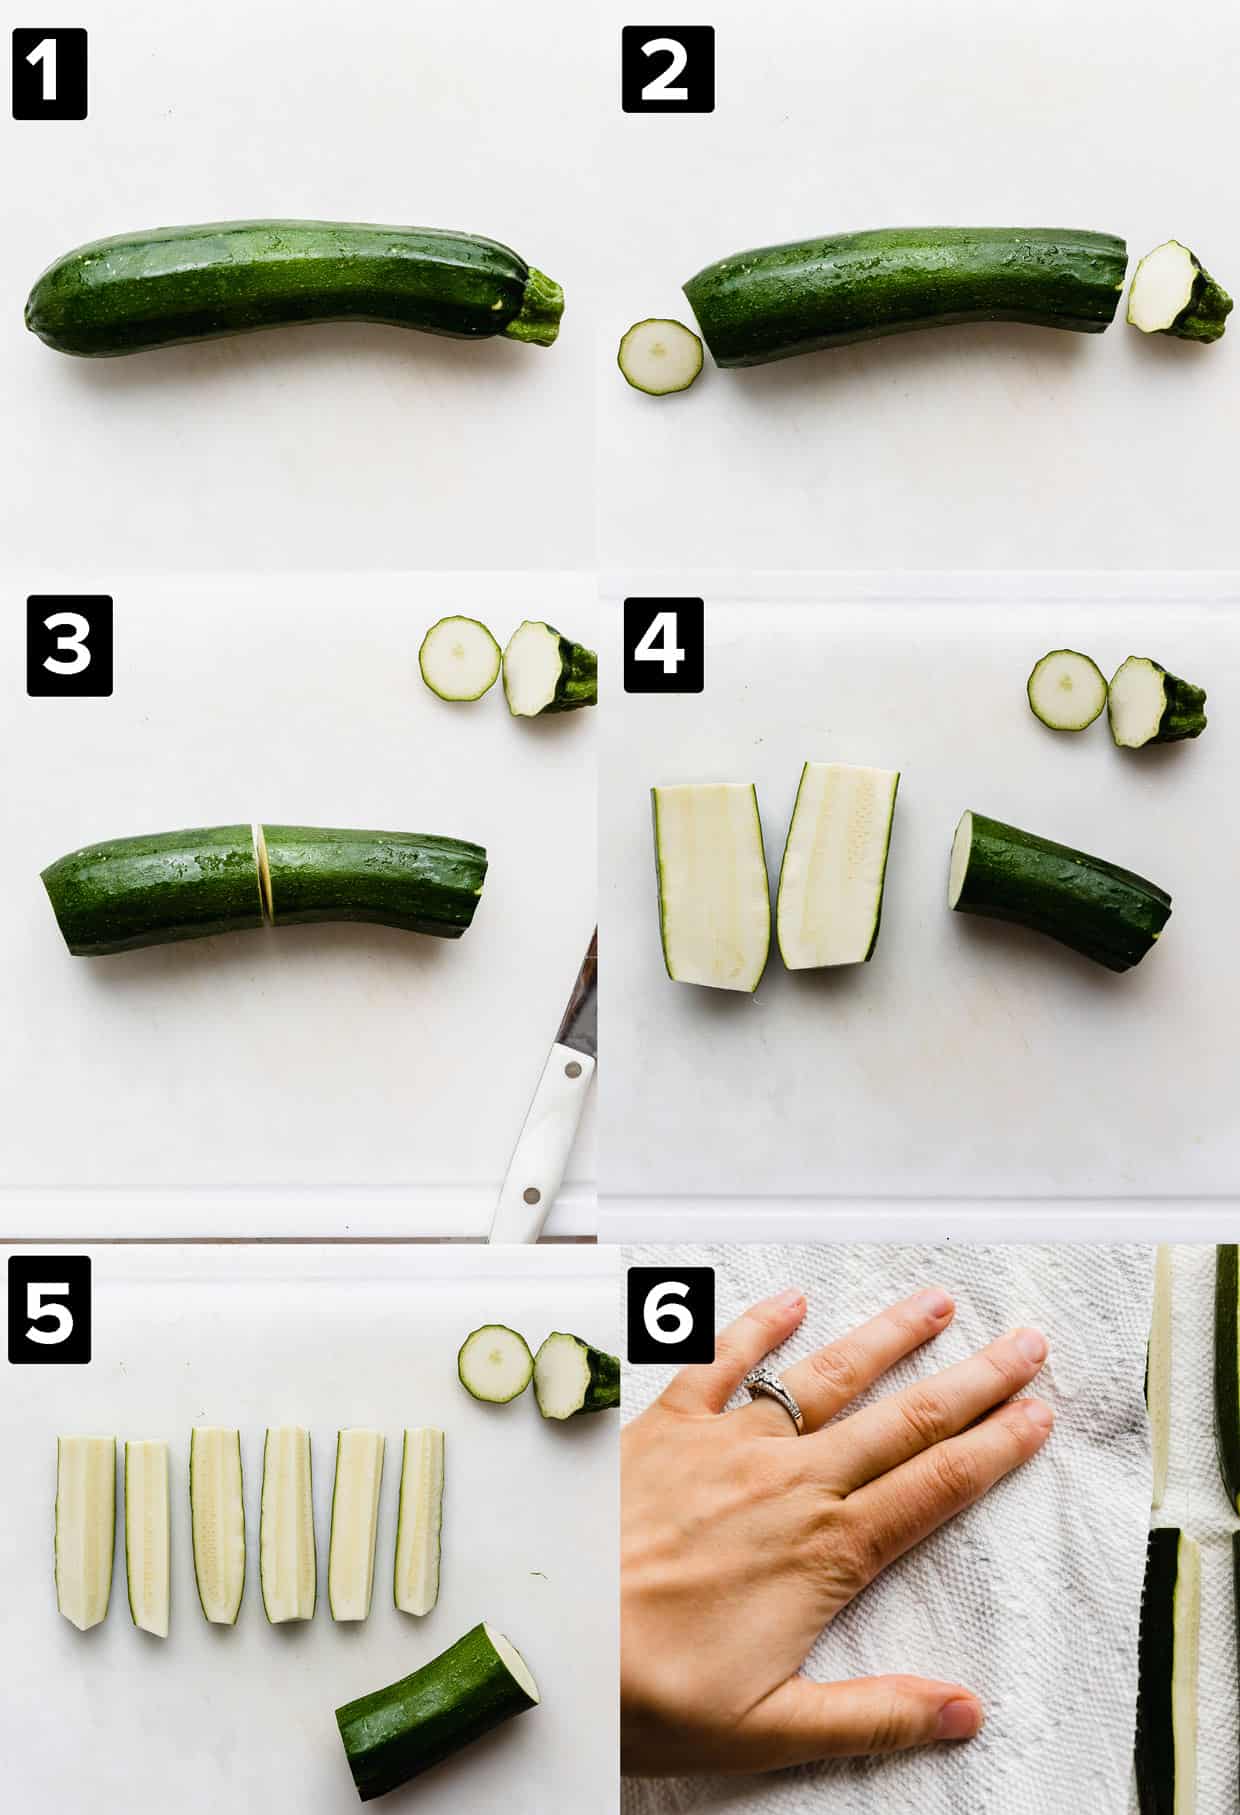 Six photos showing how to cut zucchini fries.